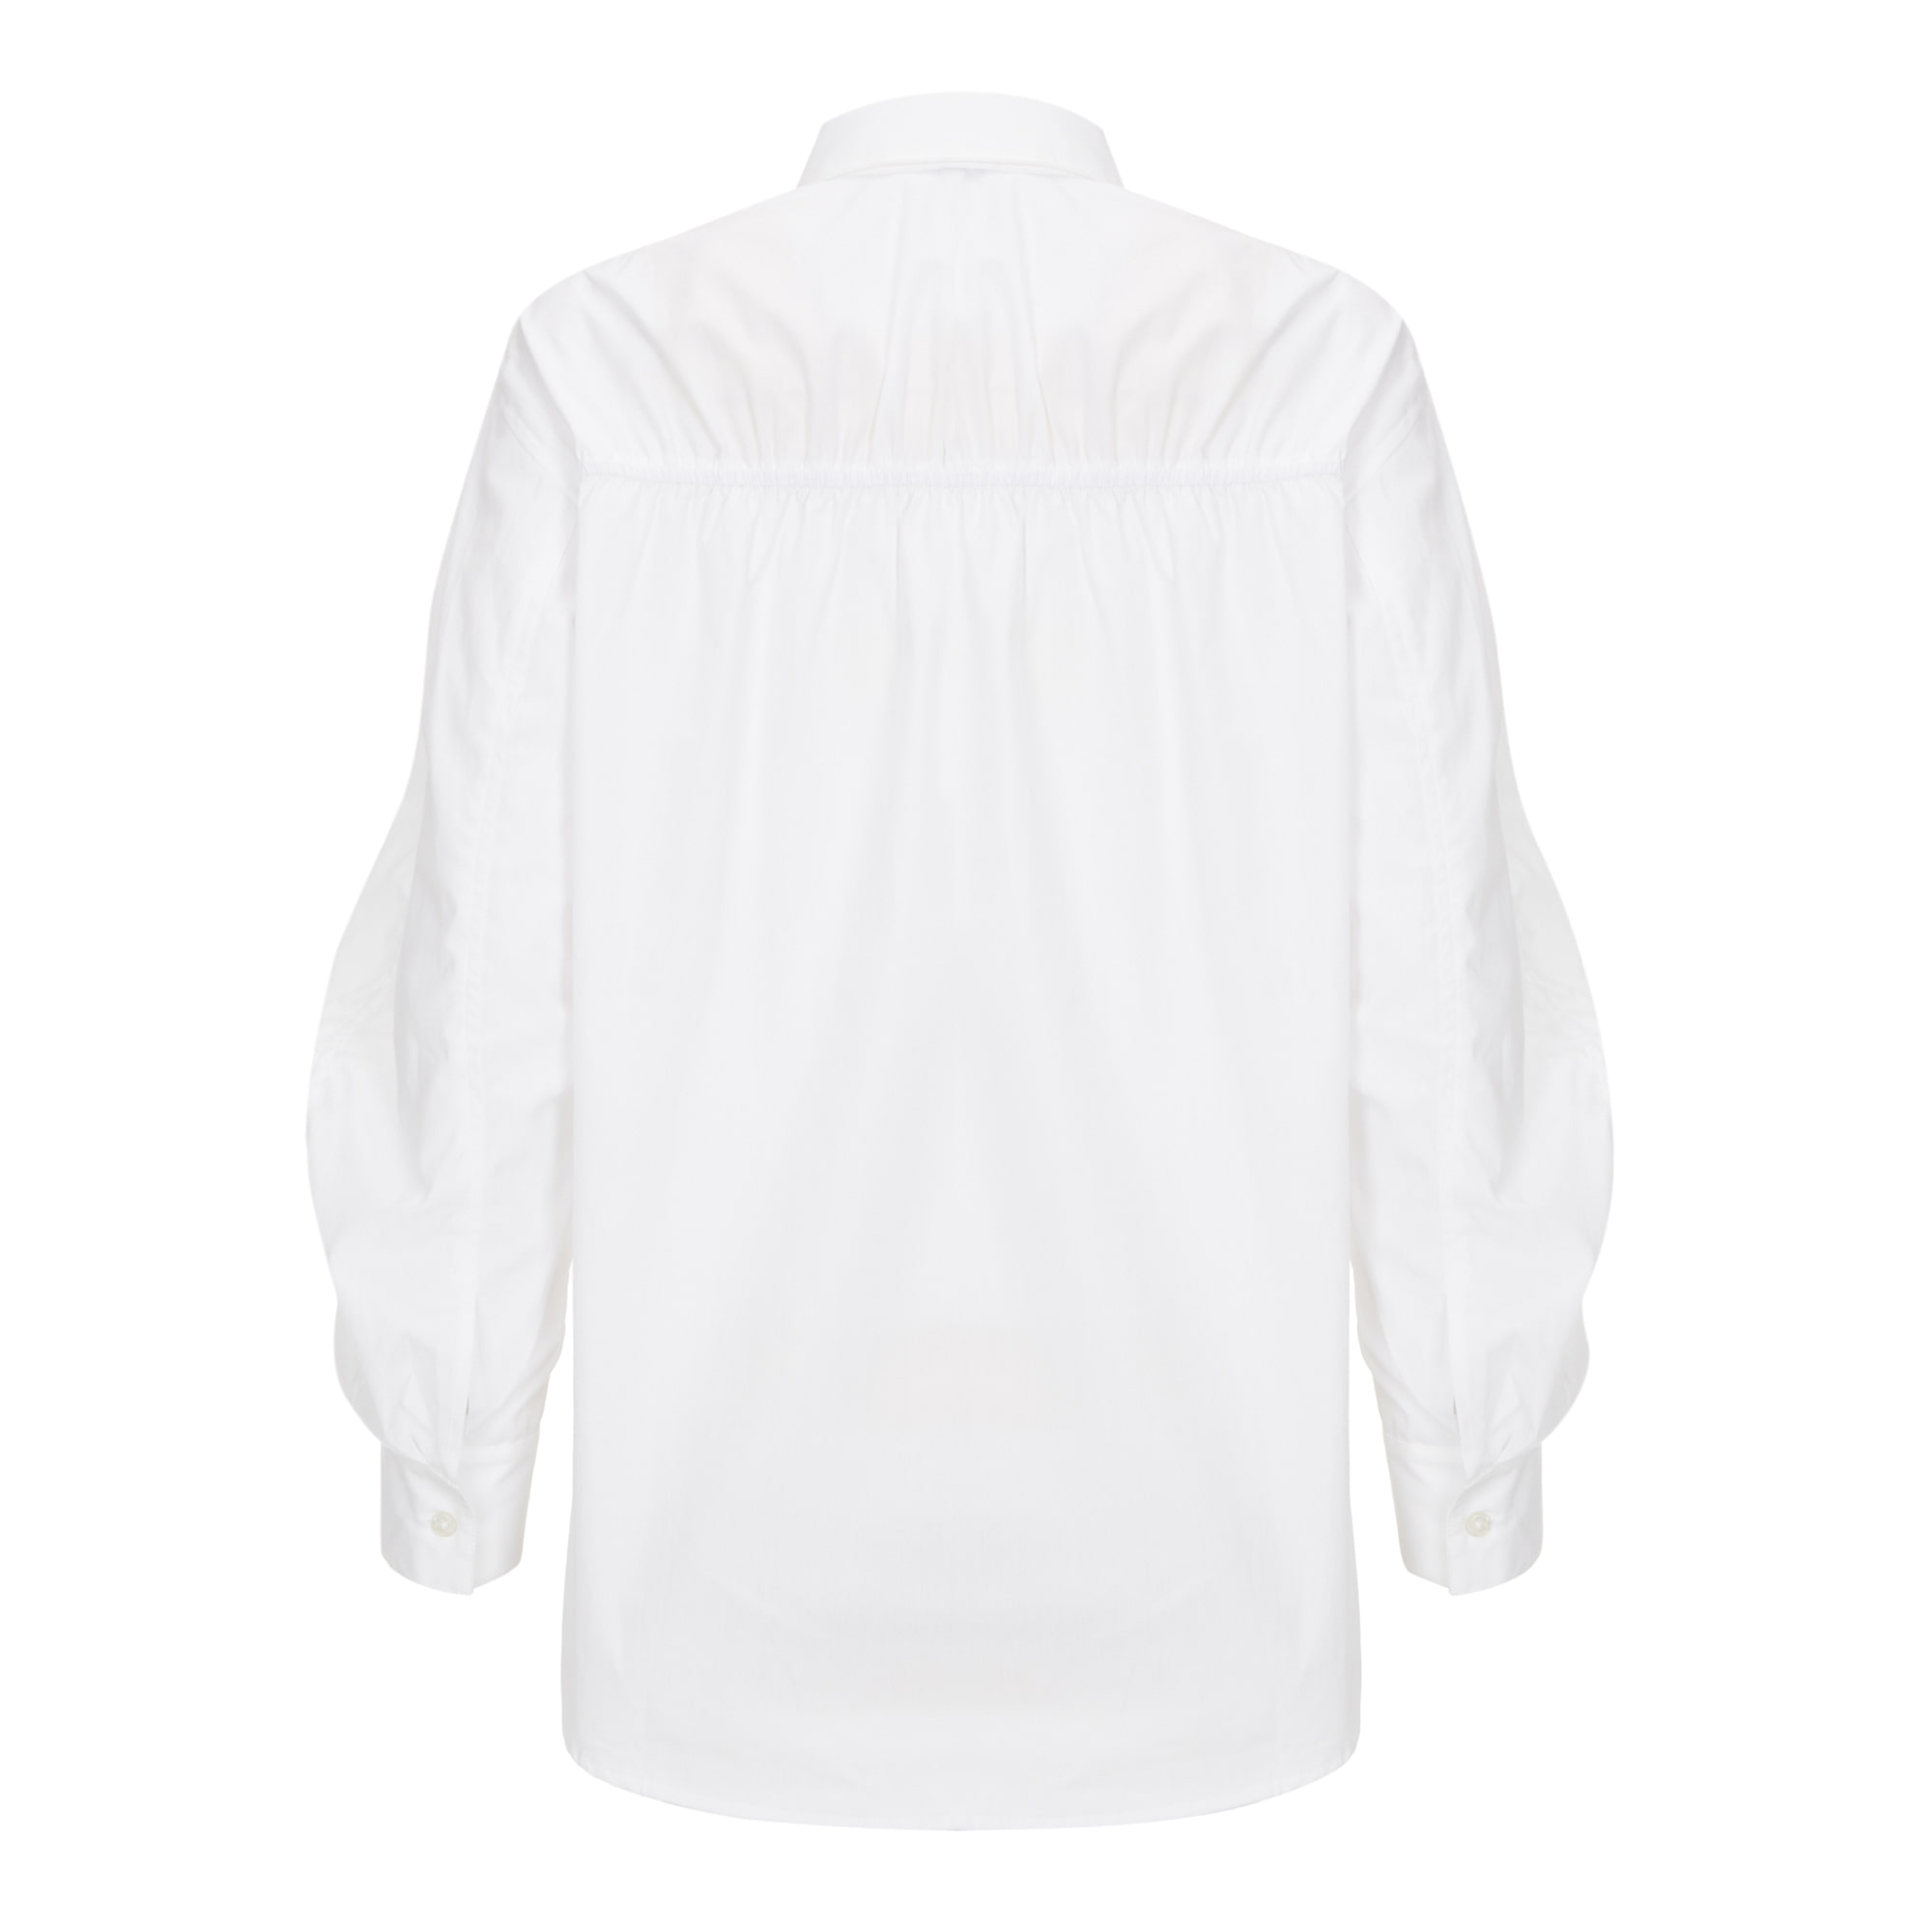 Bud Pleats Shirt (버드 플리츠 셔츠) White